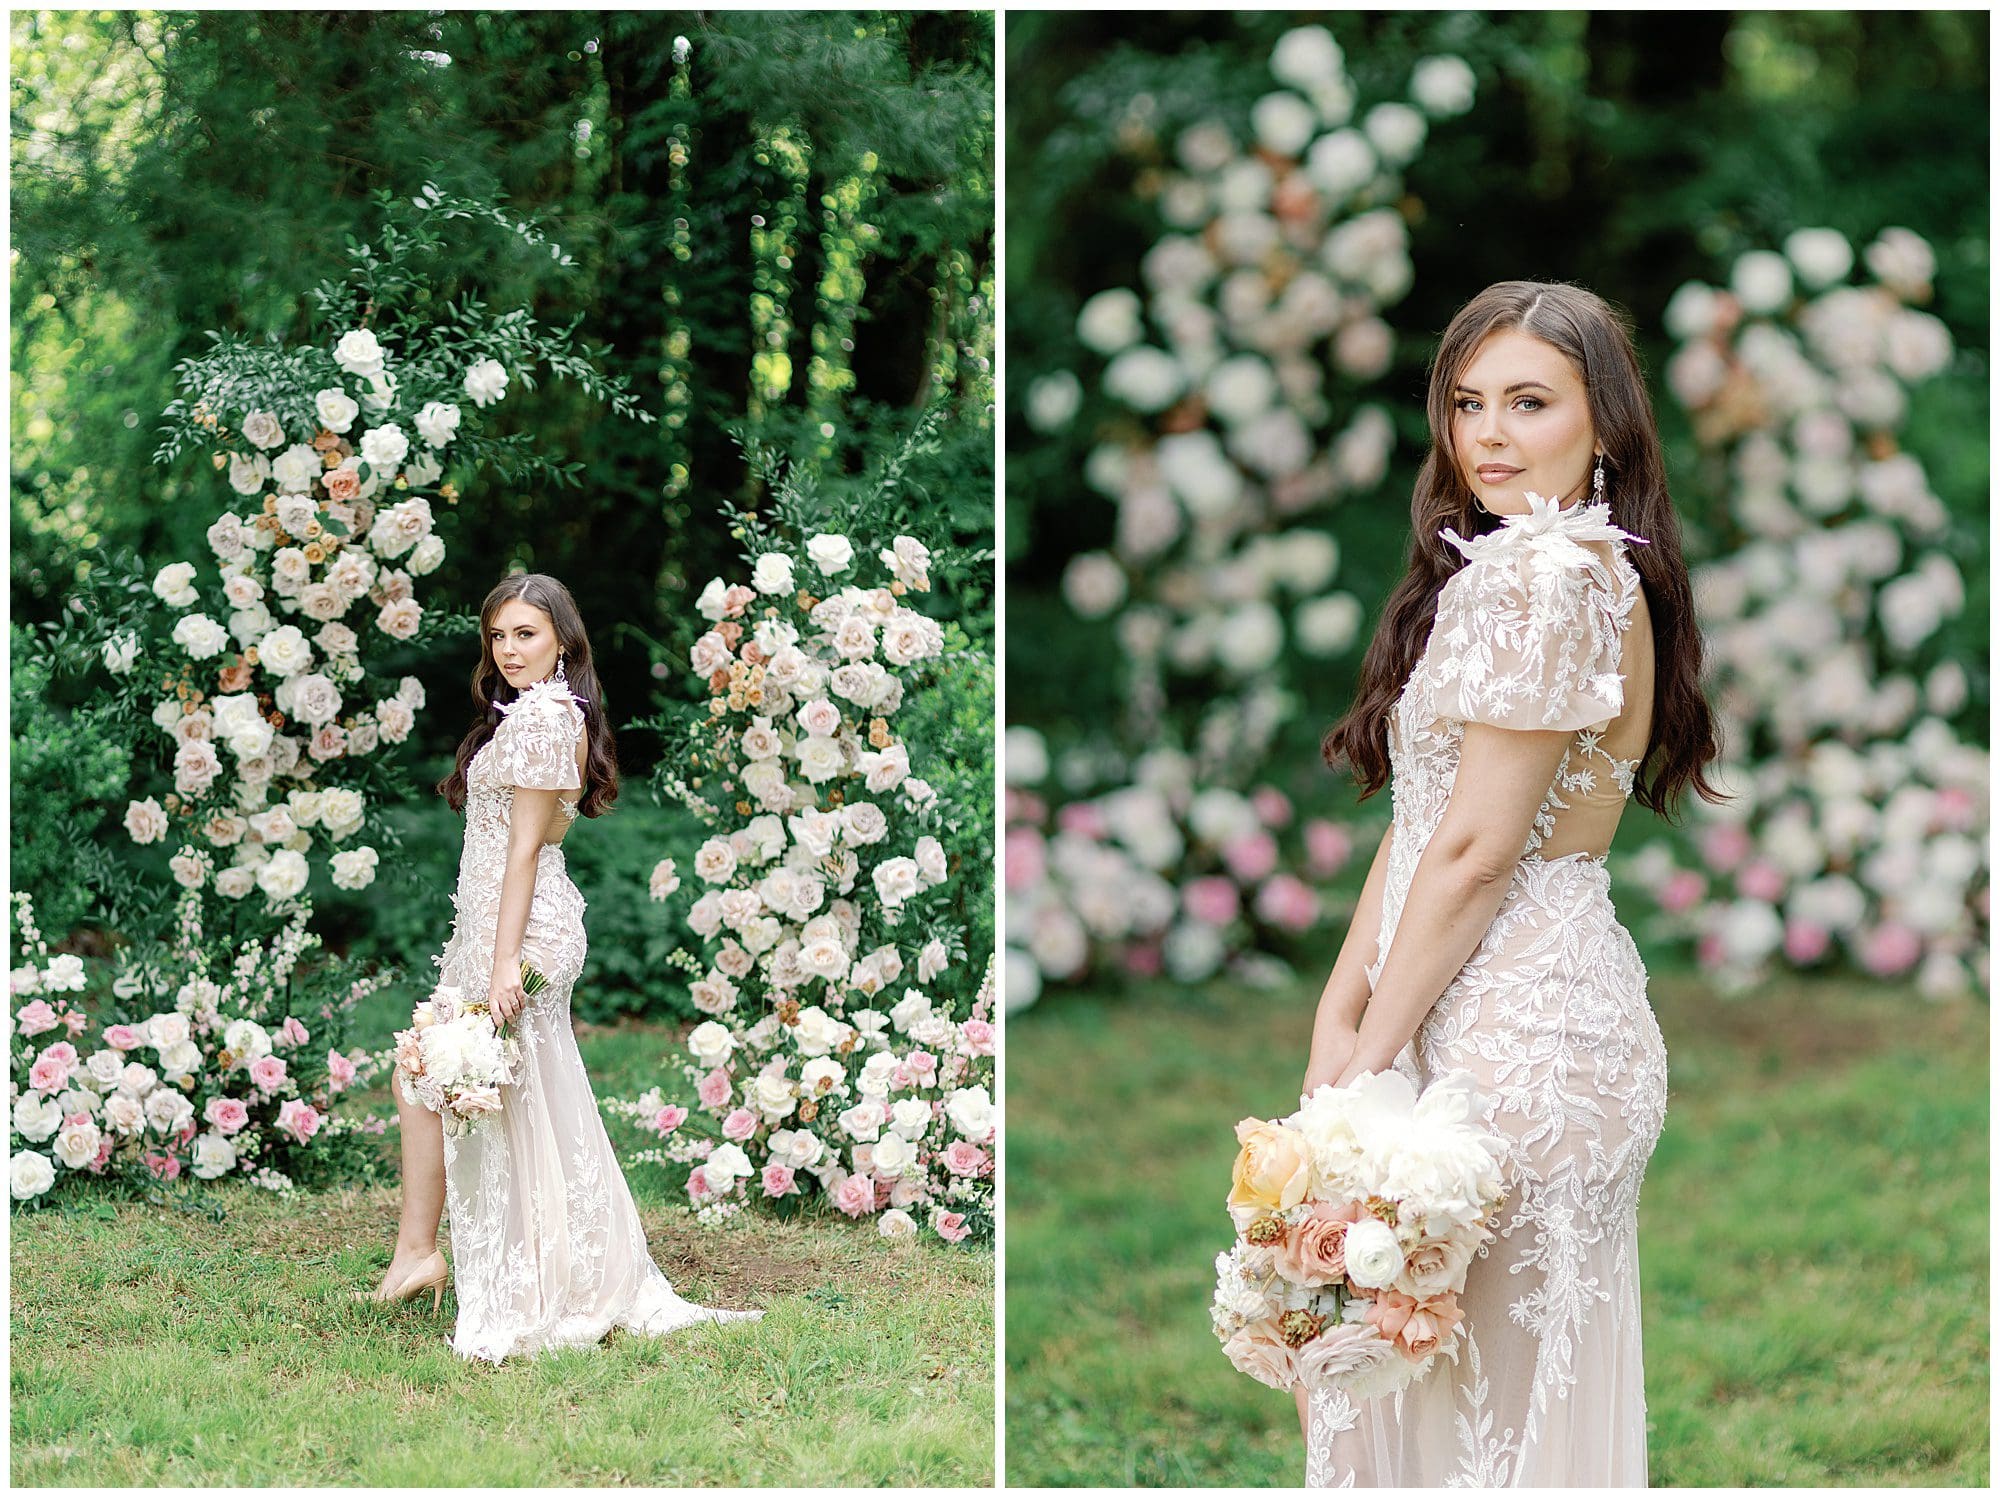 A bride posing in front of a rose garden.